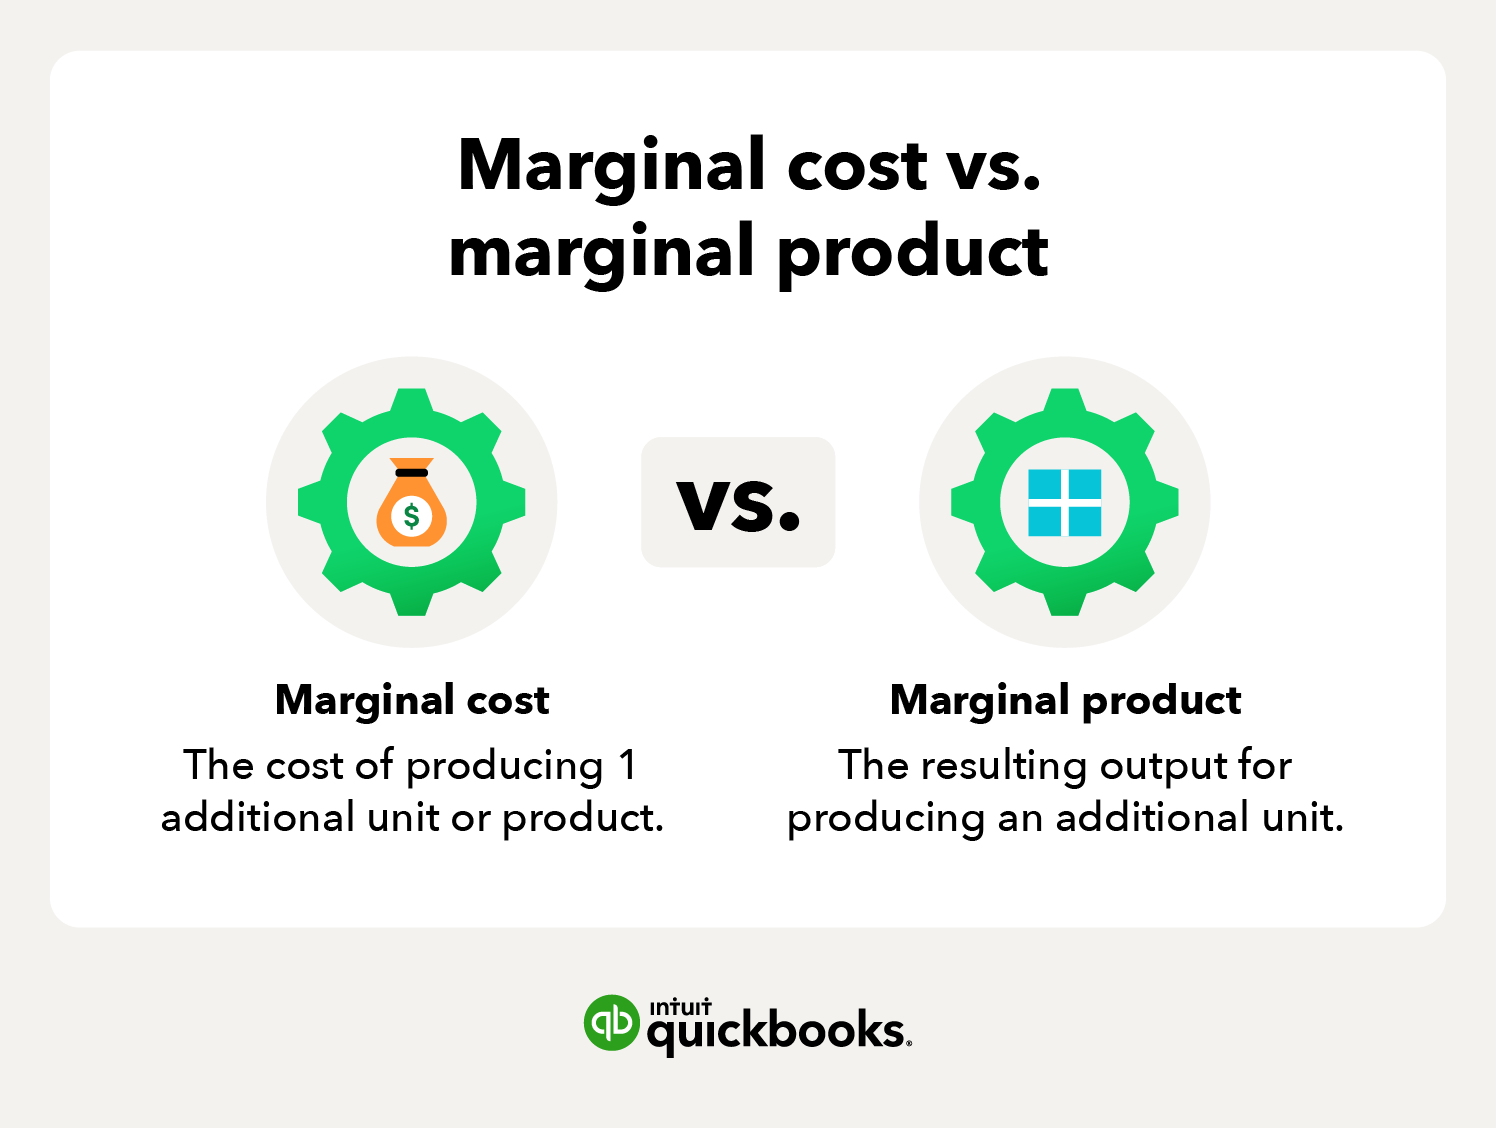 Marginal cost versus marginal product